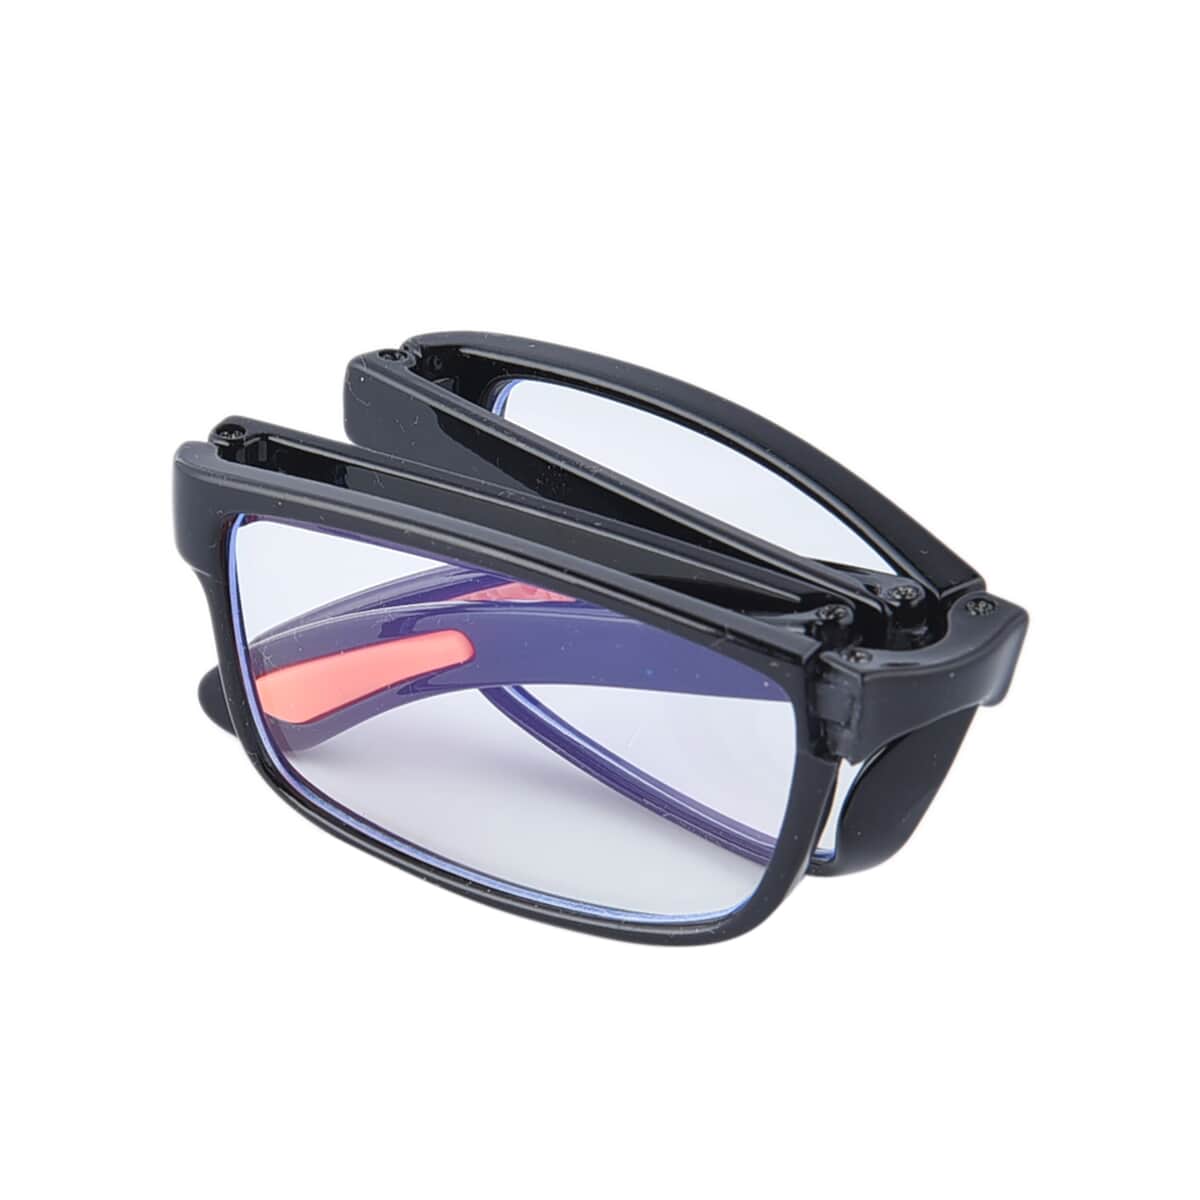 Foldable Anti-Blue Light Glasses with Testing kit - Black & PU Leather 5.71" x 5.51" x 1.18" image number 5